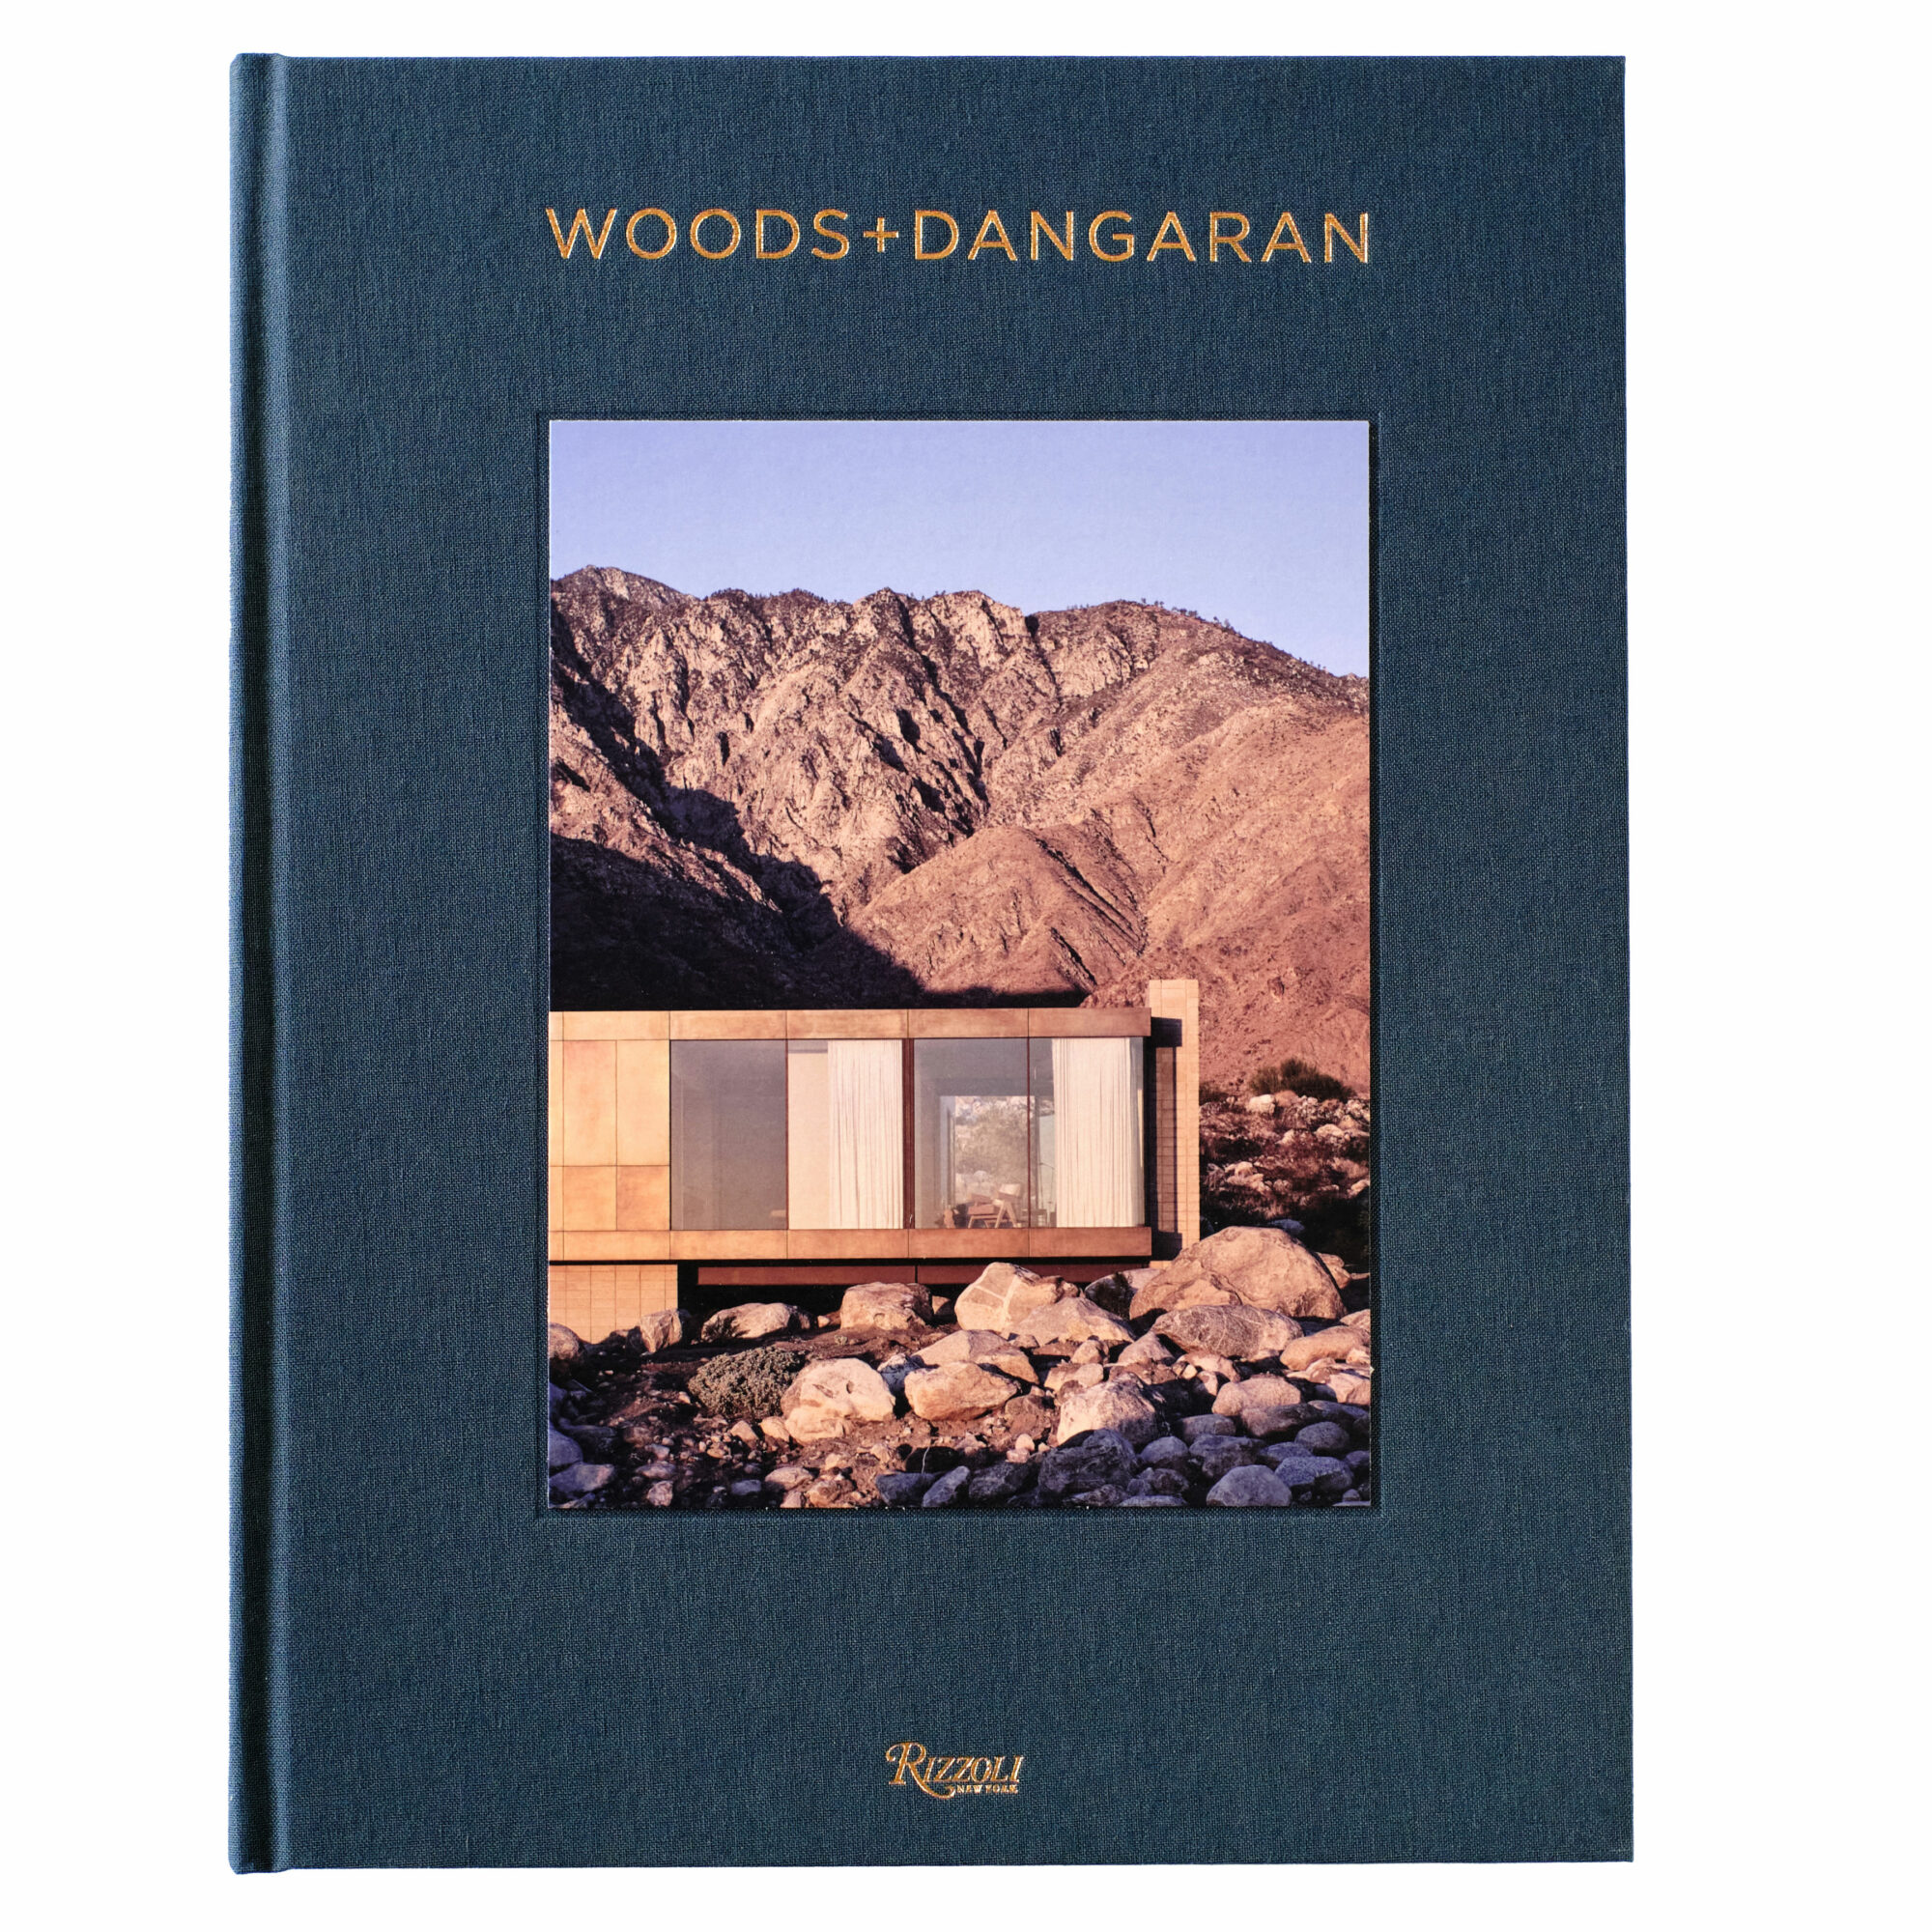 woods + dangaran book cover featuring modern exterior